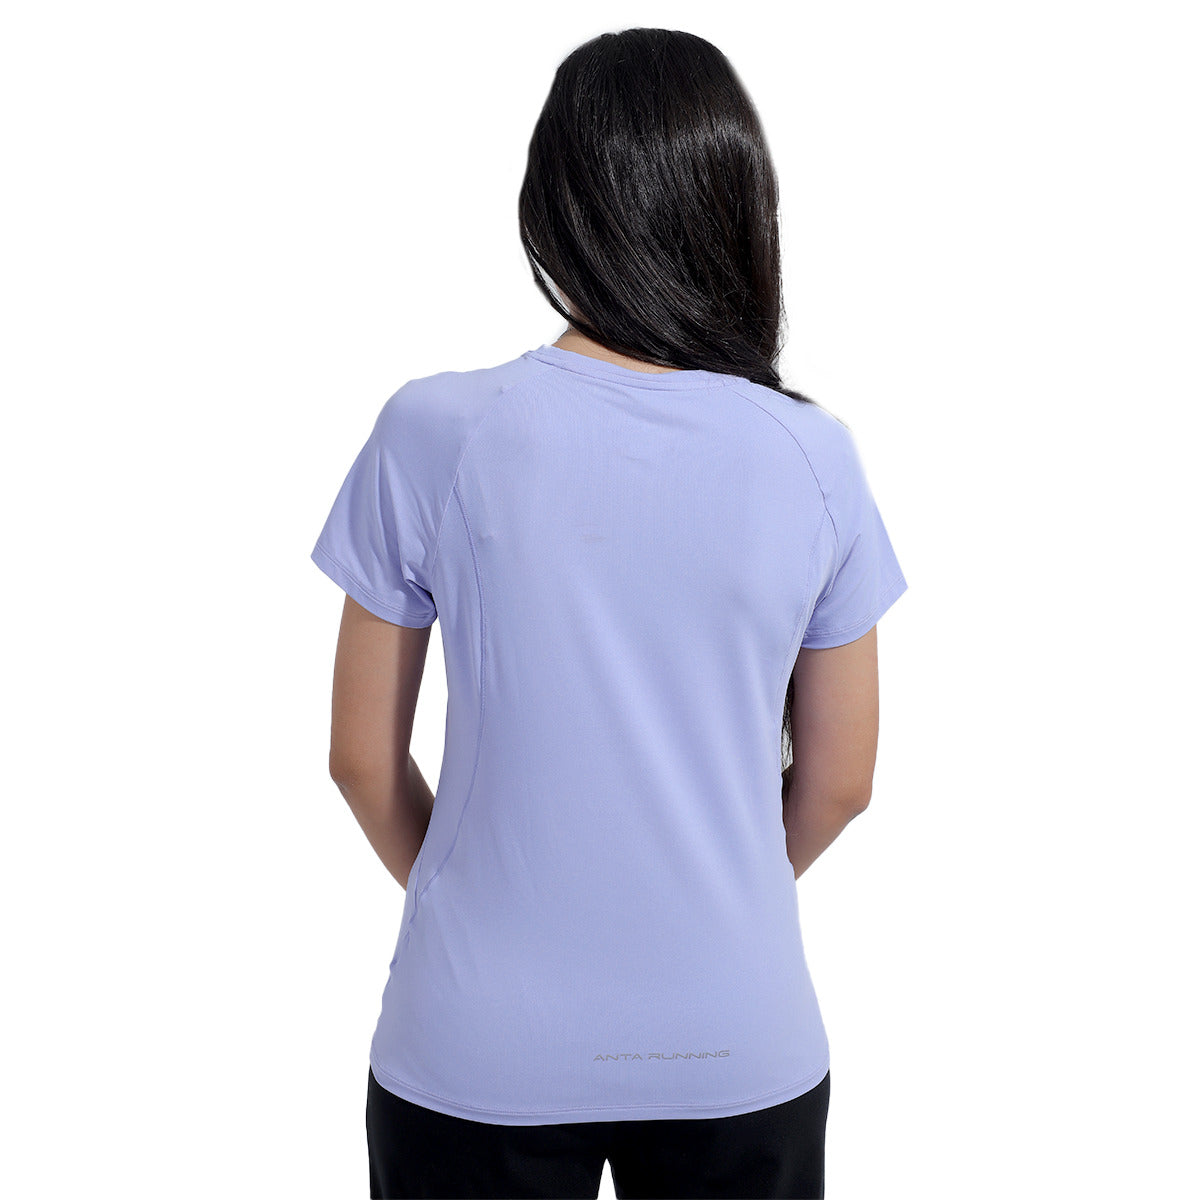 Anta Sports T-Shirt For Women, Light Blue